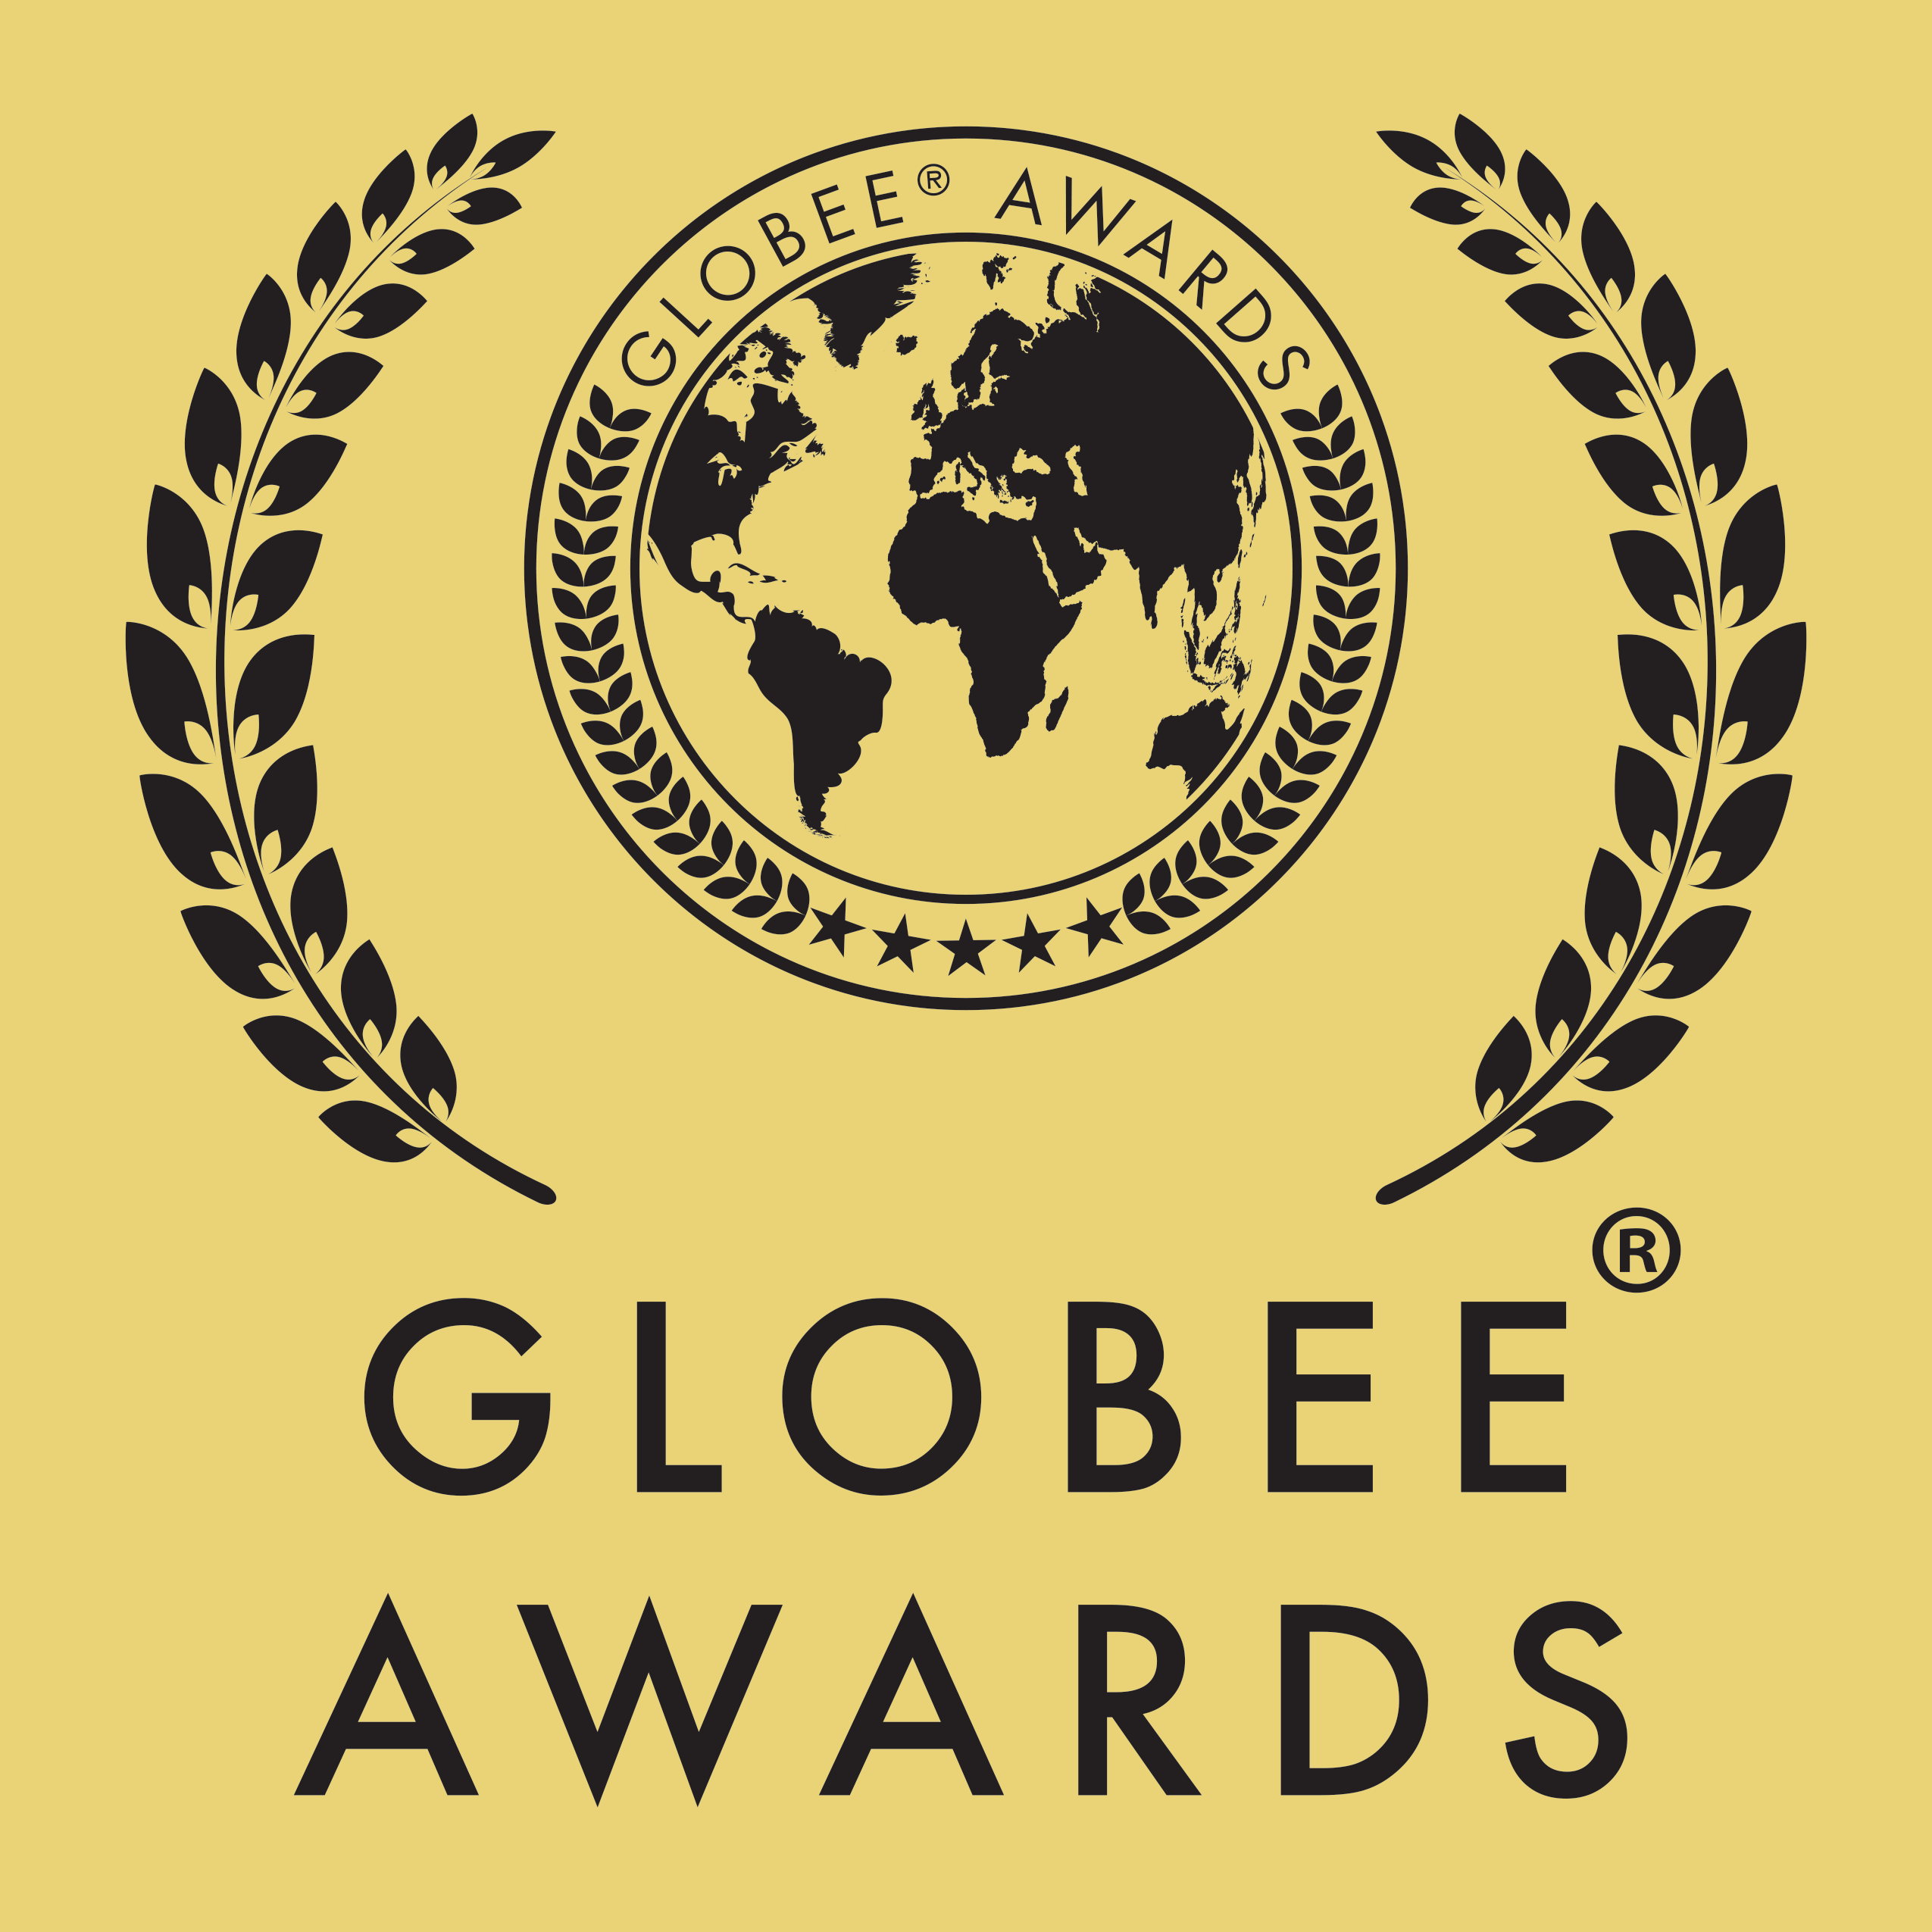 Globee Awards